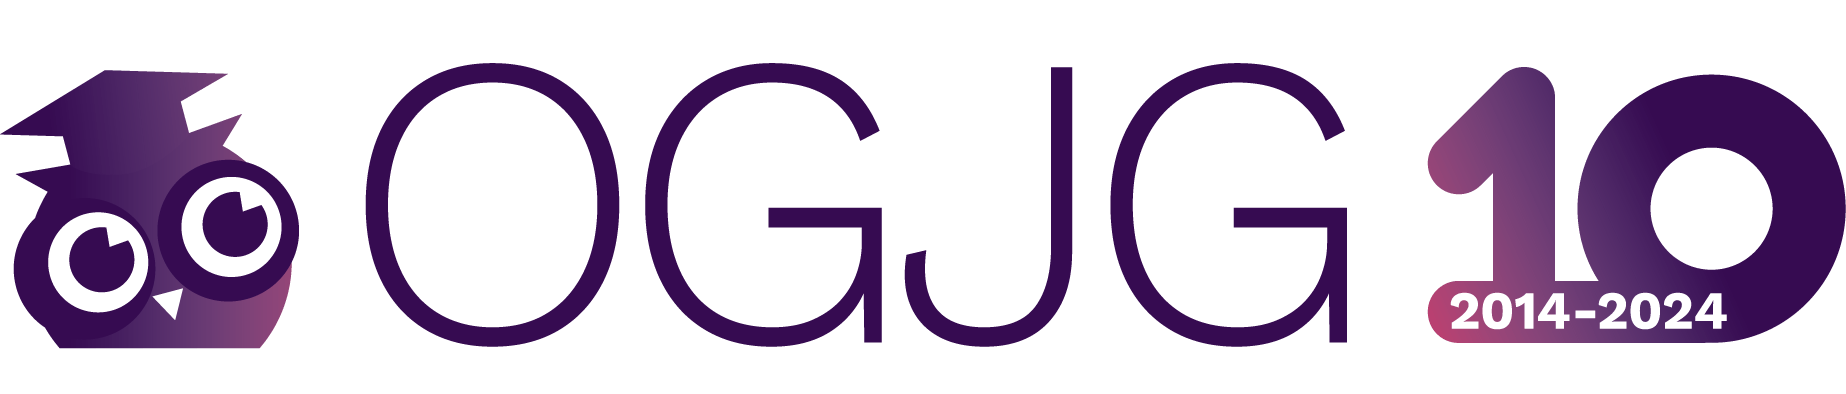 OGJG logo 10 jaar